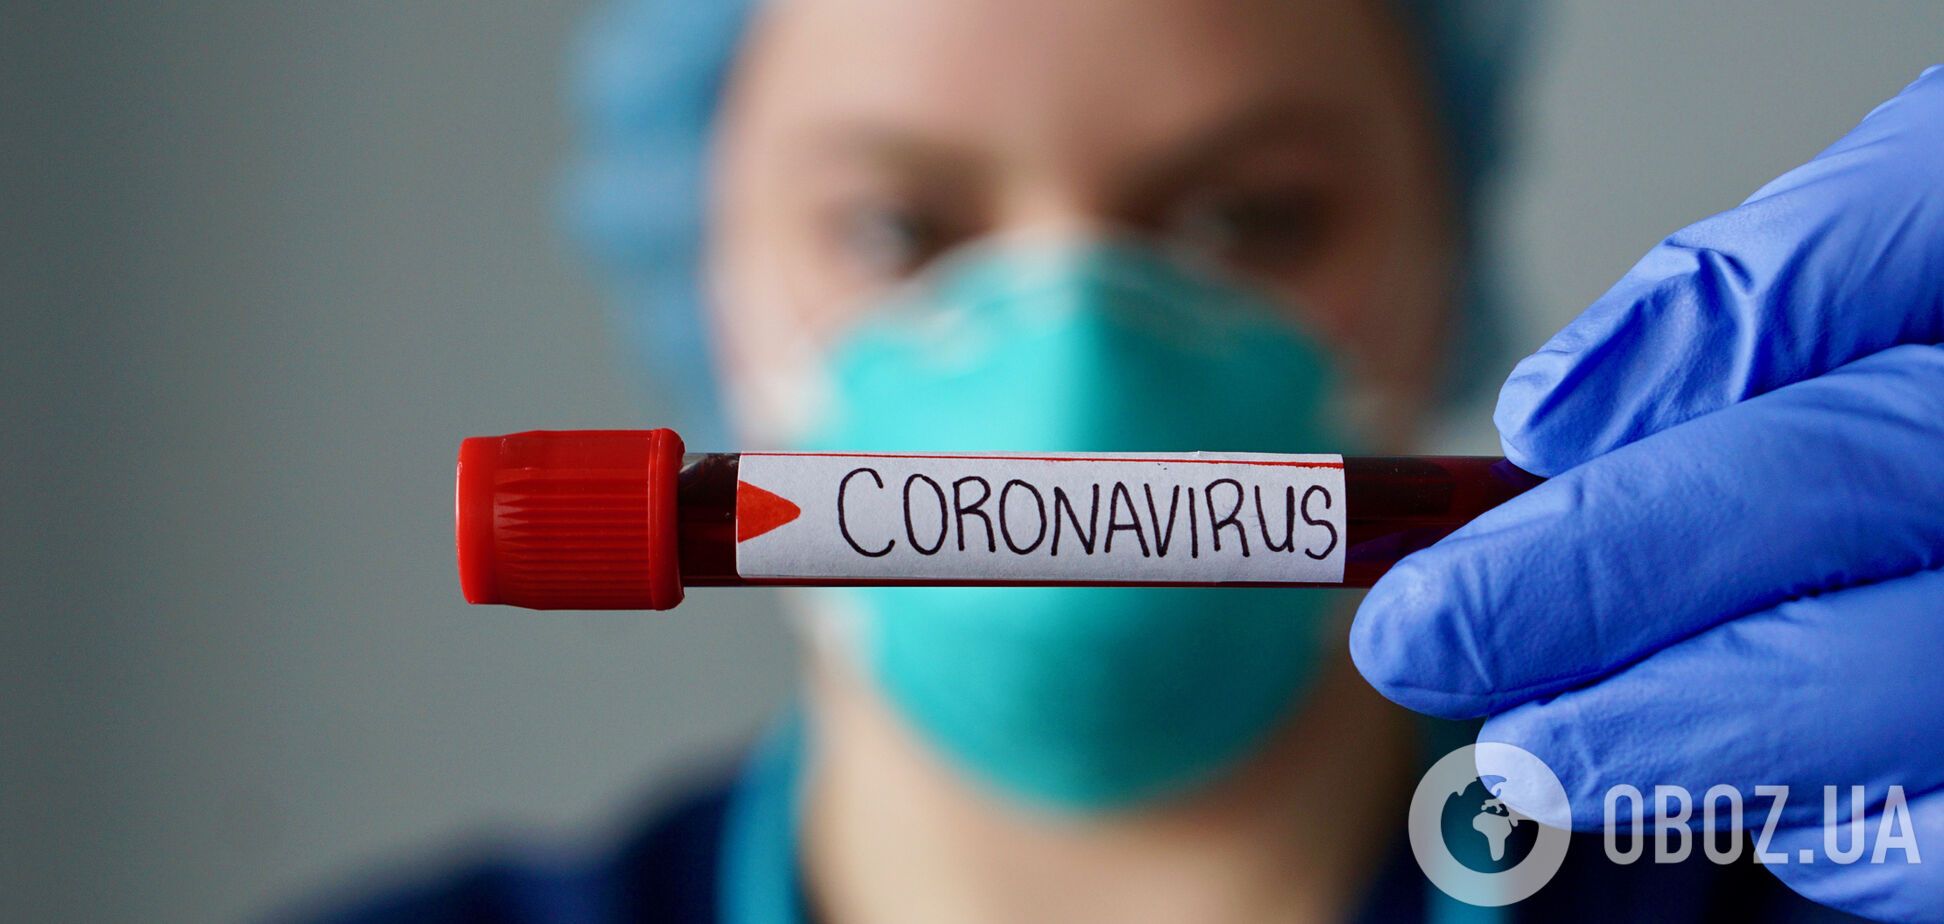 Коронавирус сделает передышку, но не из-за карантина: инфекционист дал прогноз по пандемии